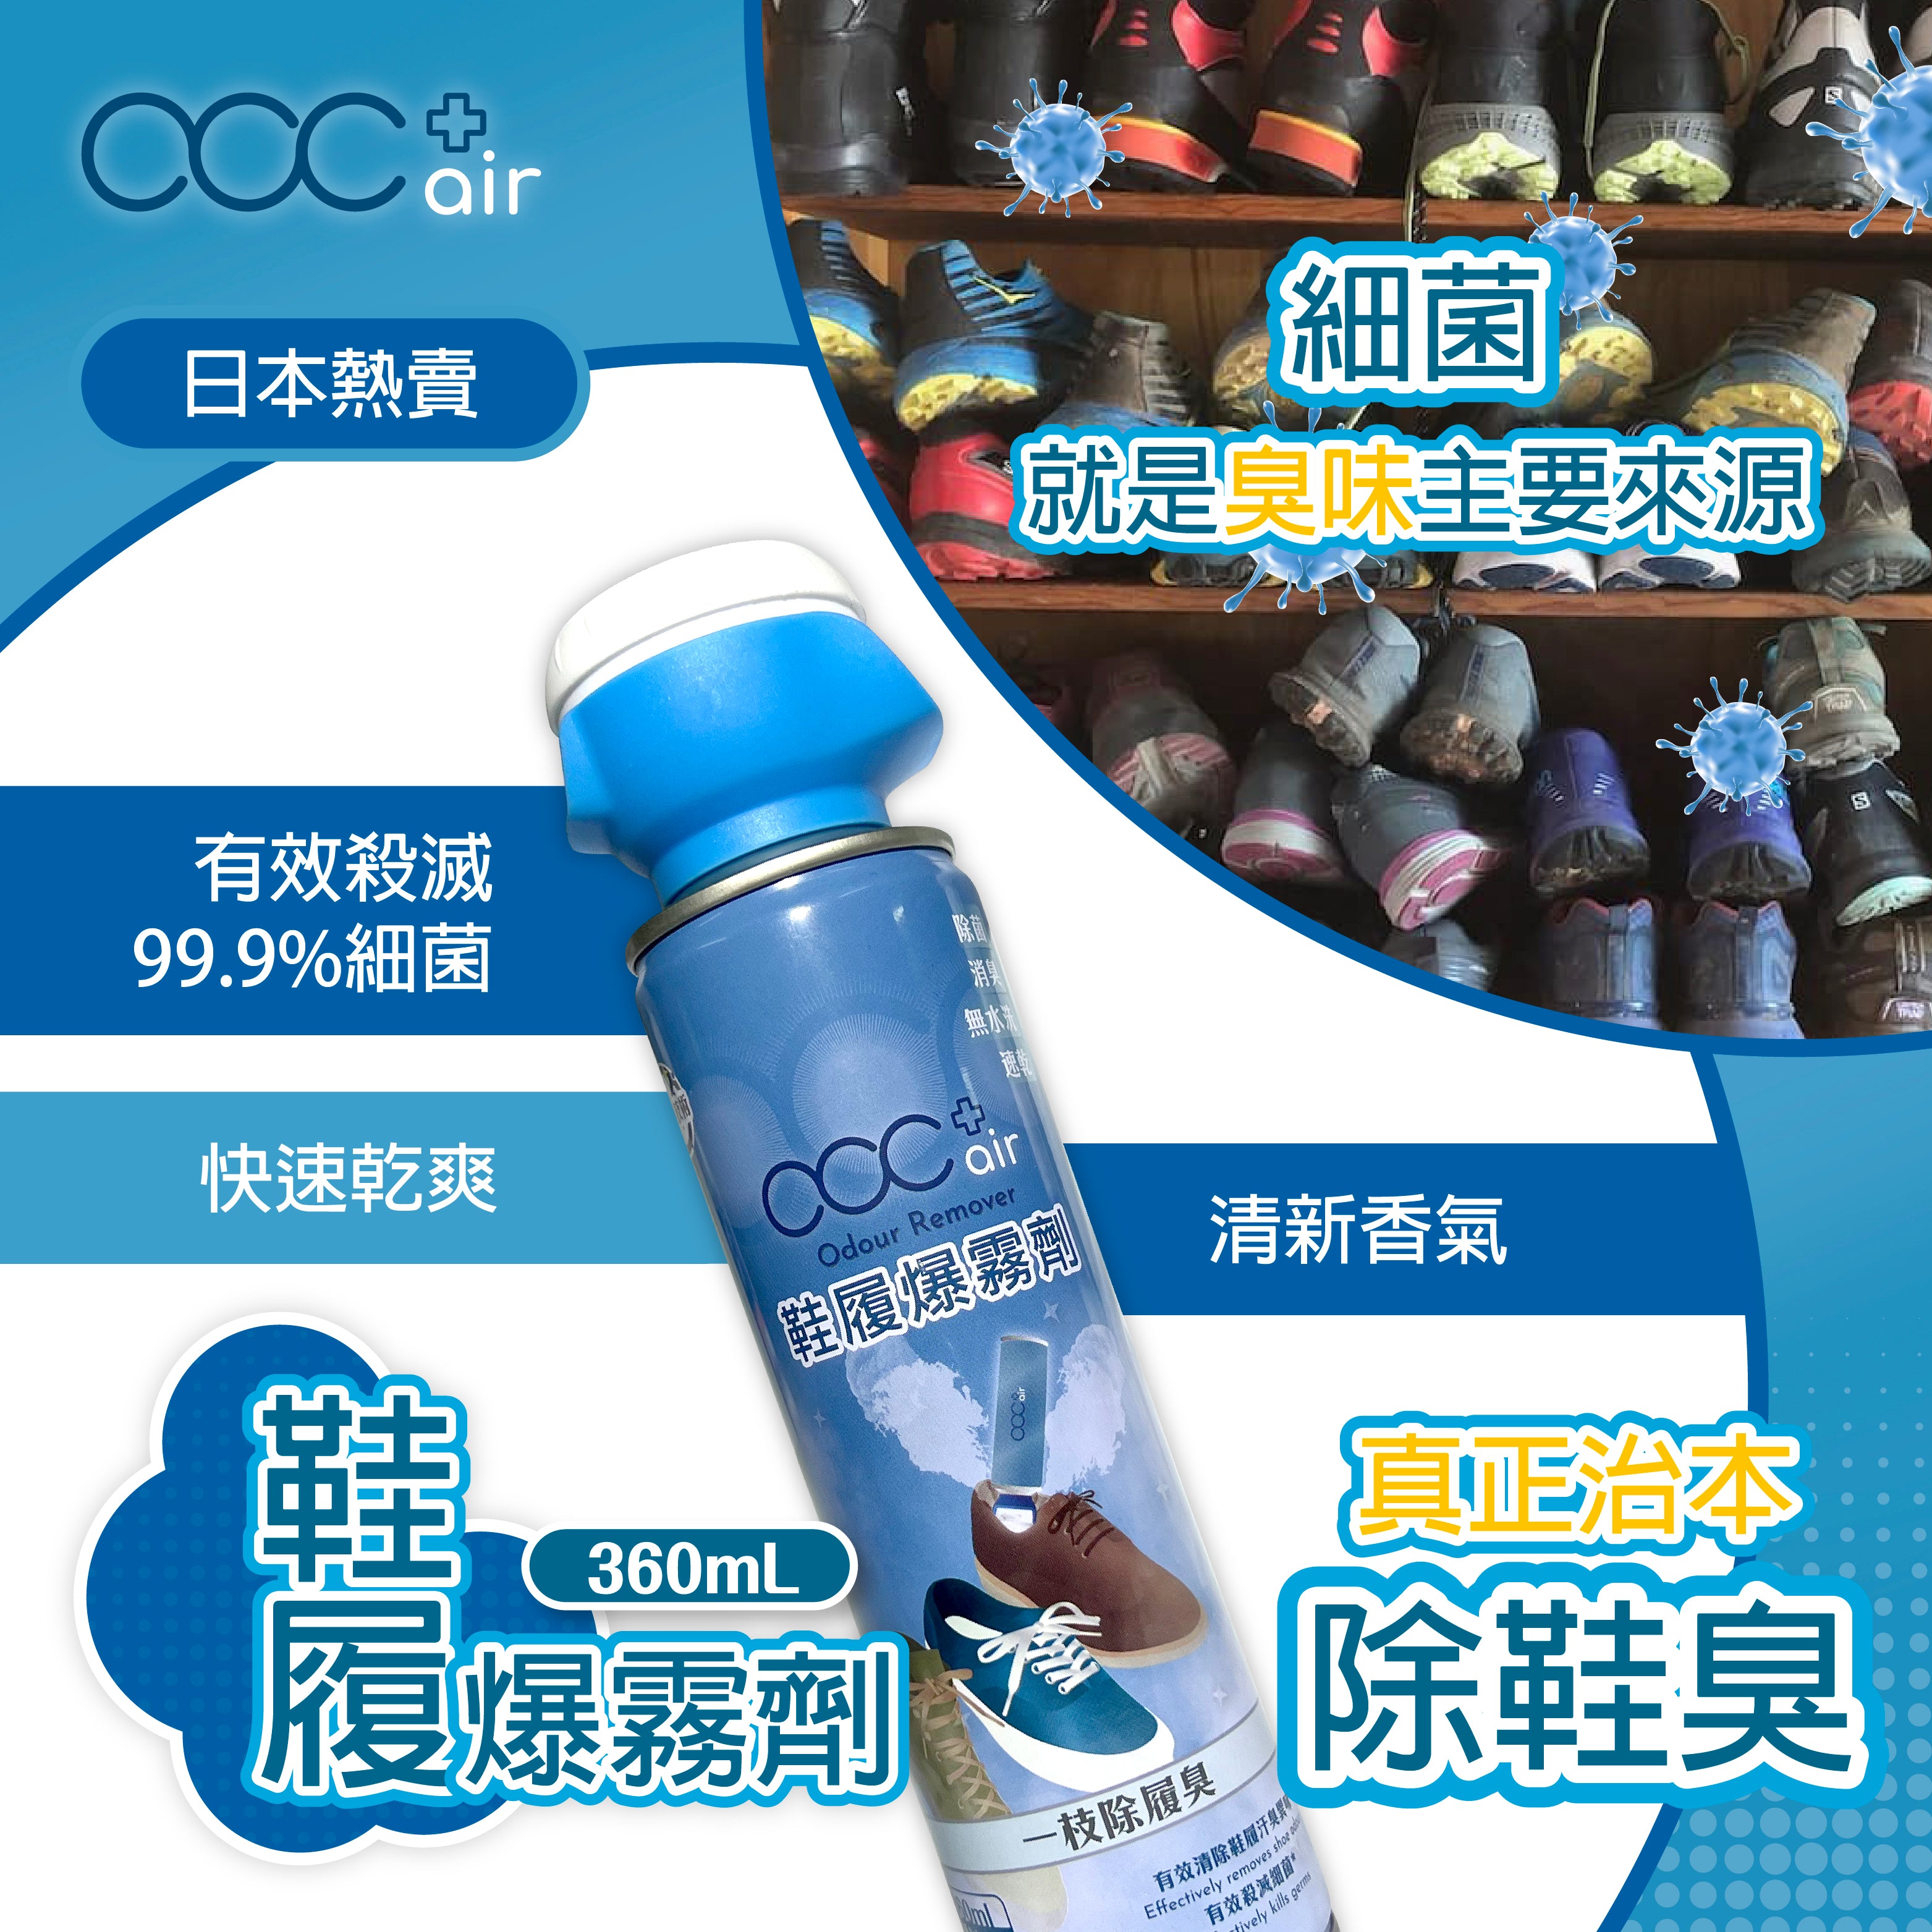 acc+ air 鞋履爆霧劑 日本城／阿布泰／HKTVmall 有售 有效除臭 一枝除履臭